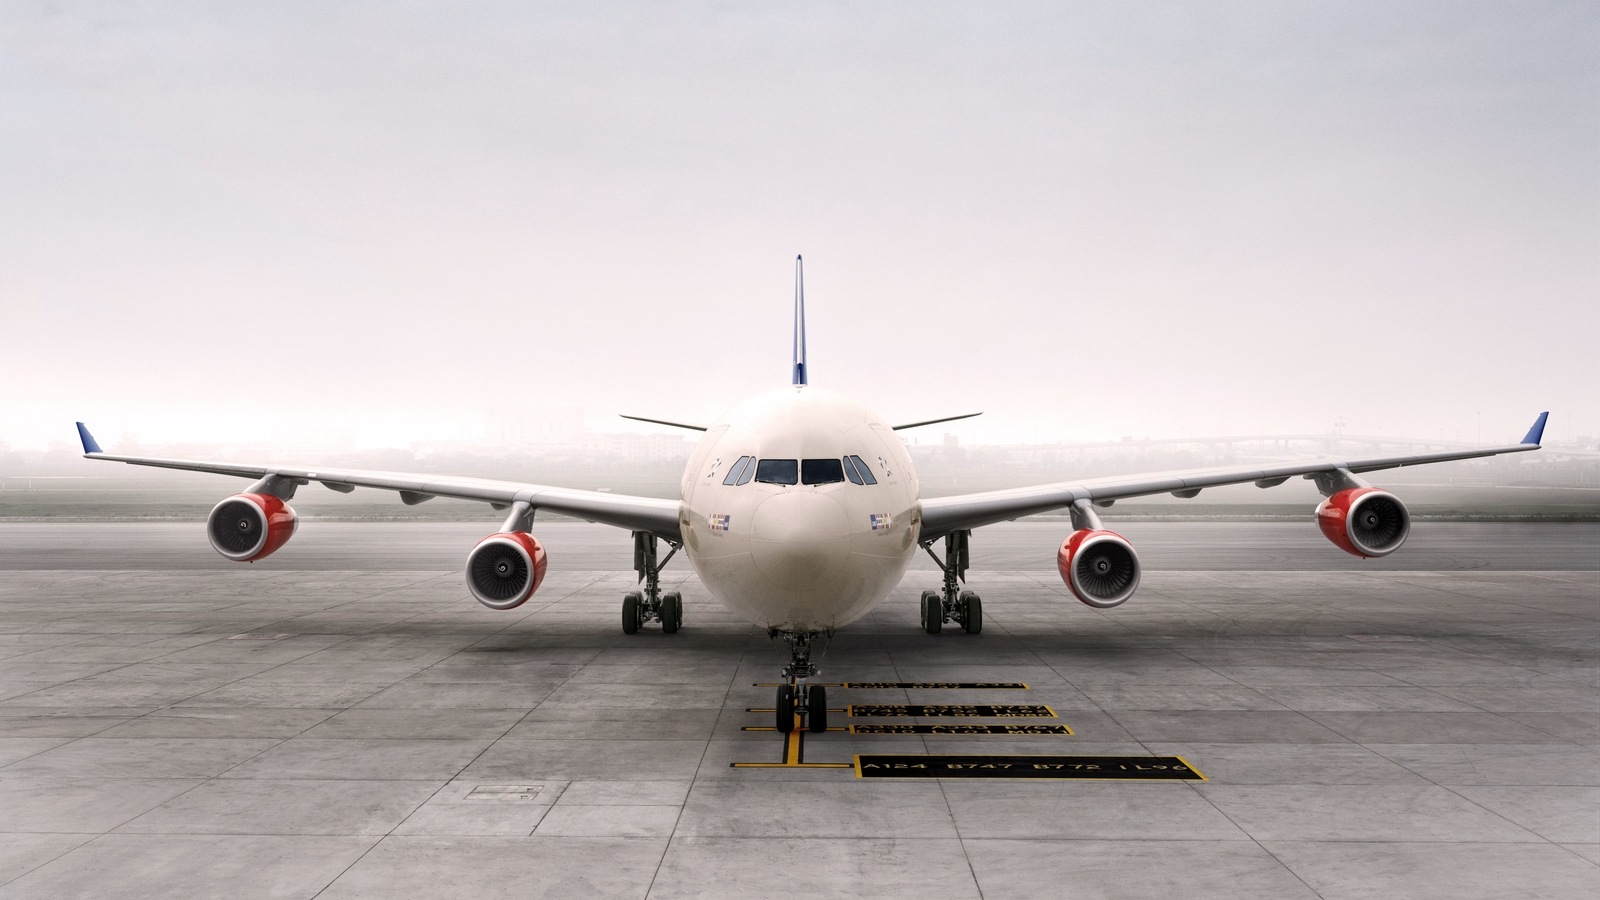 Картинка: Самолёт, Airbus, A340, пассажирский, крылья, двигатели, площадка, аэродром, туман